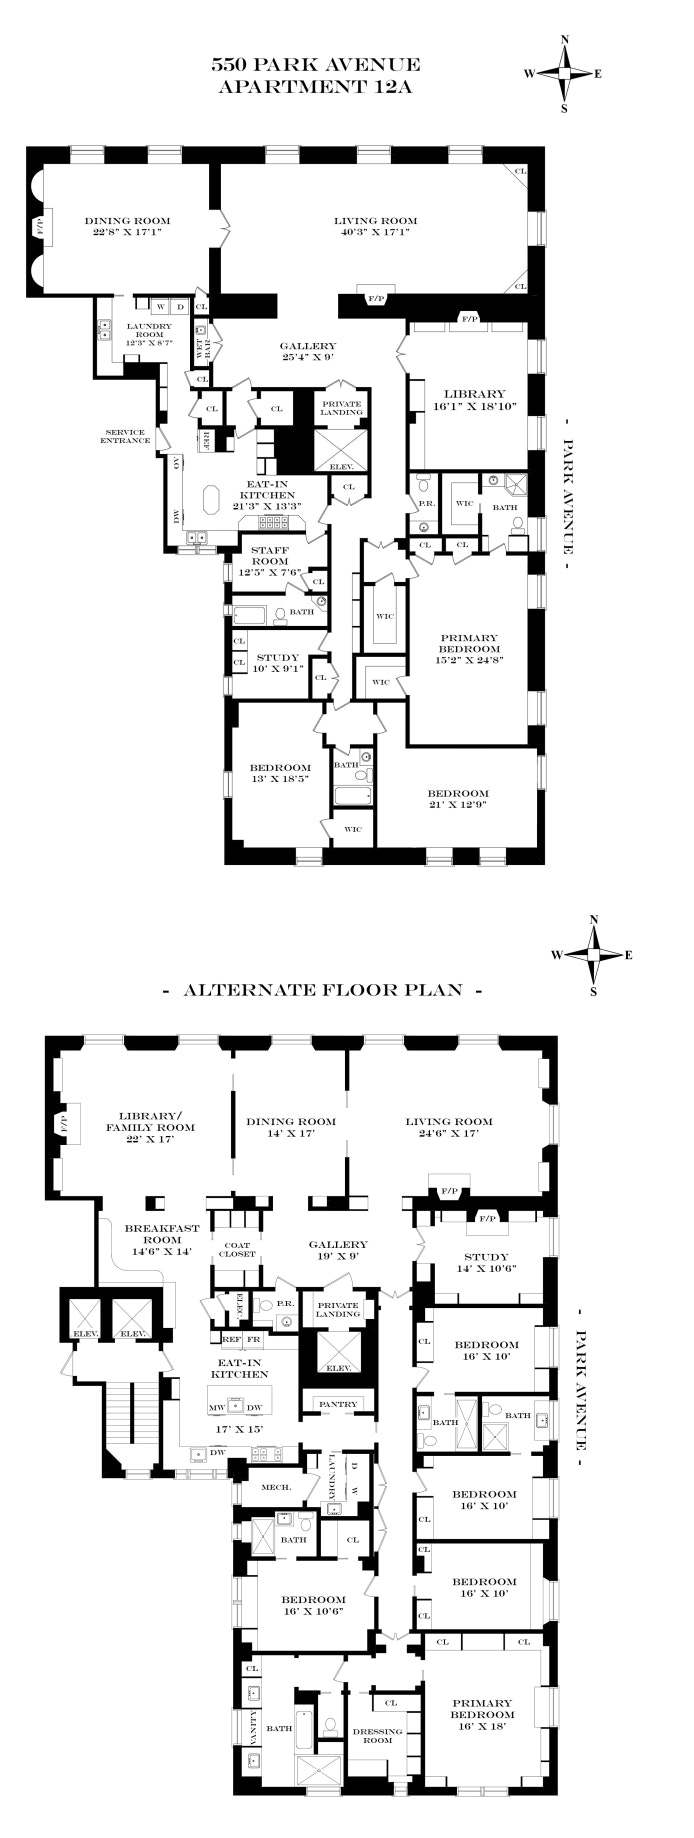 Floorplan for 550 Park Avenue, 12A